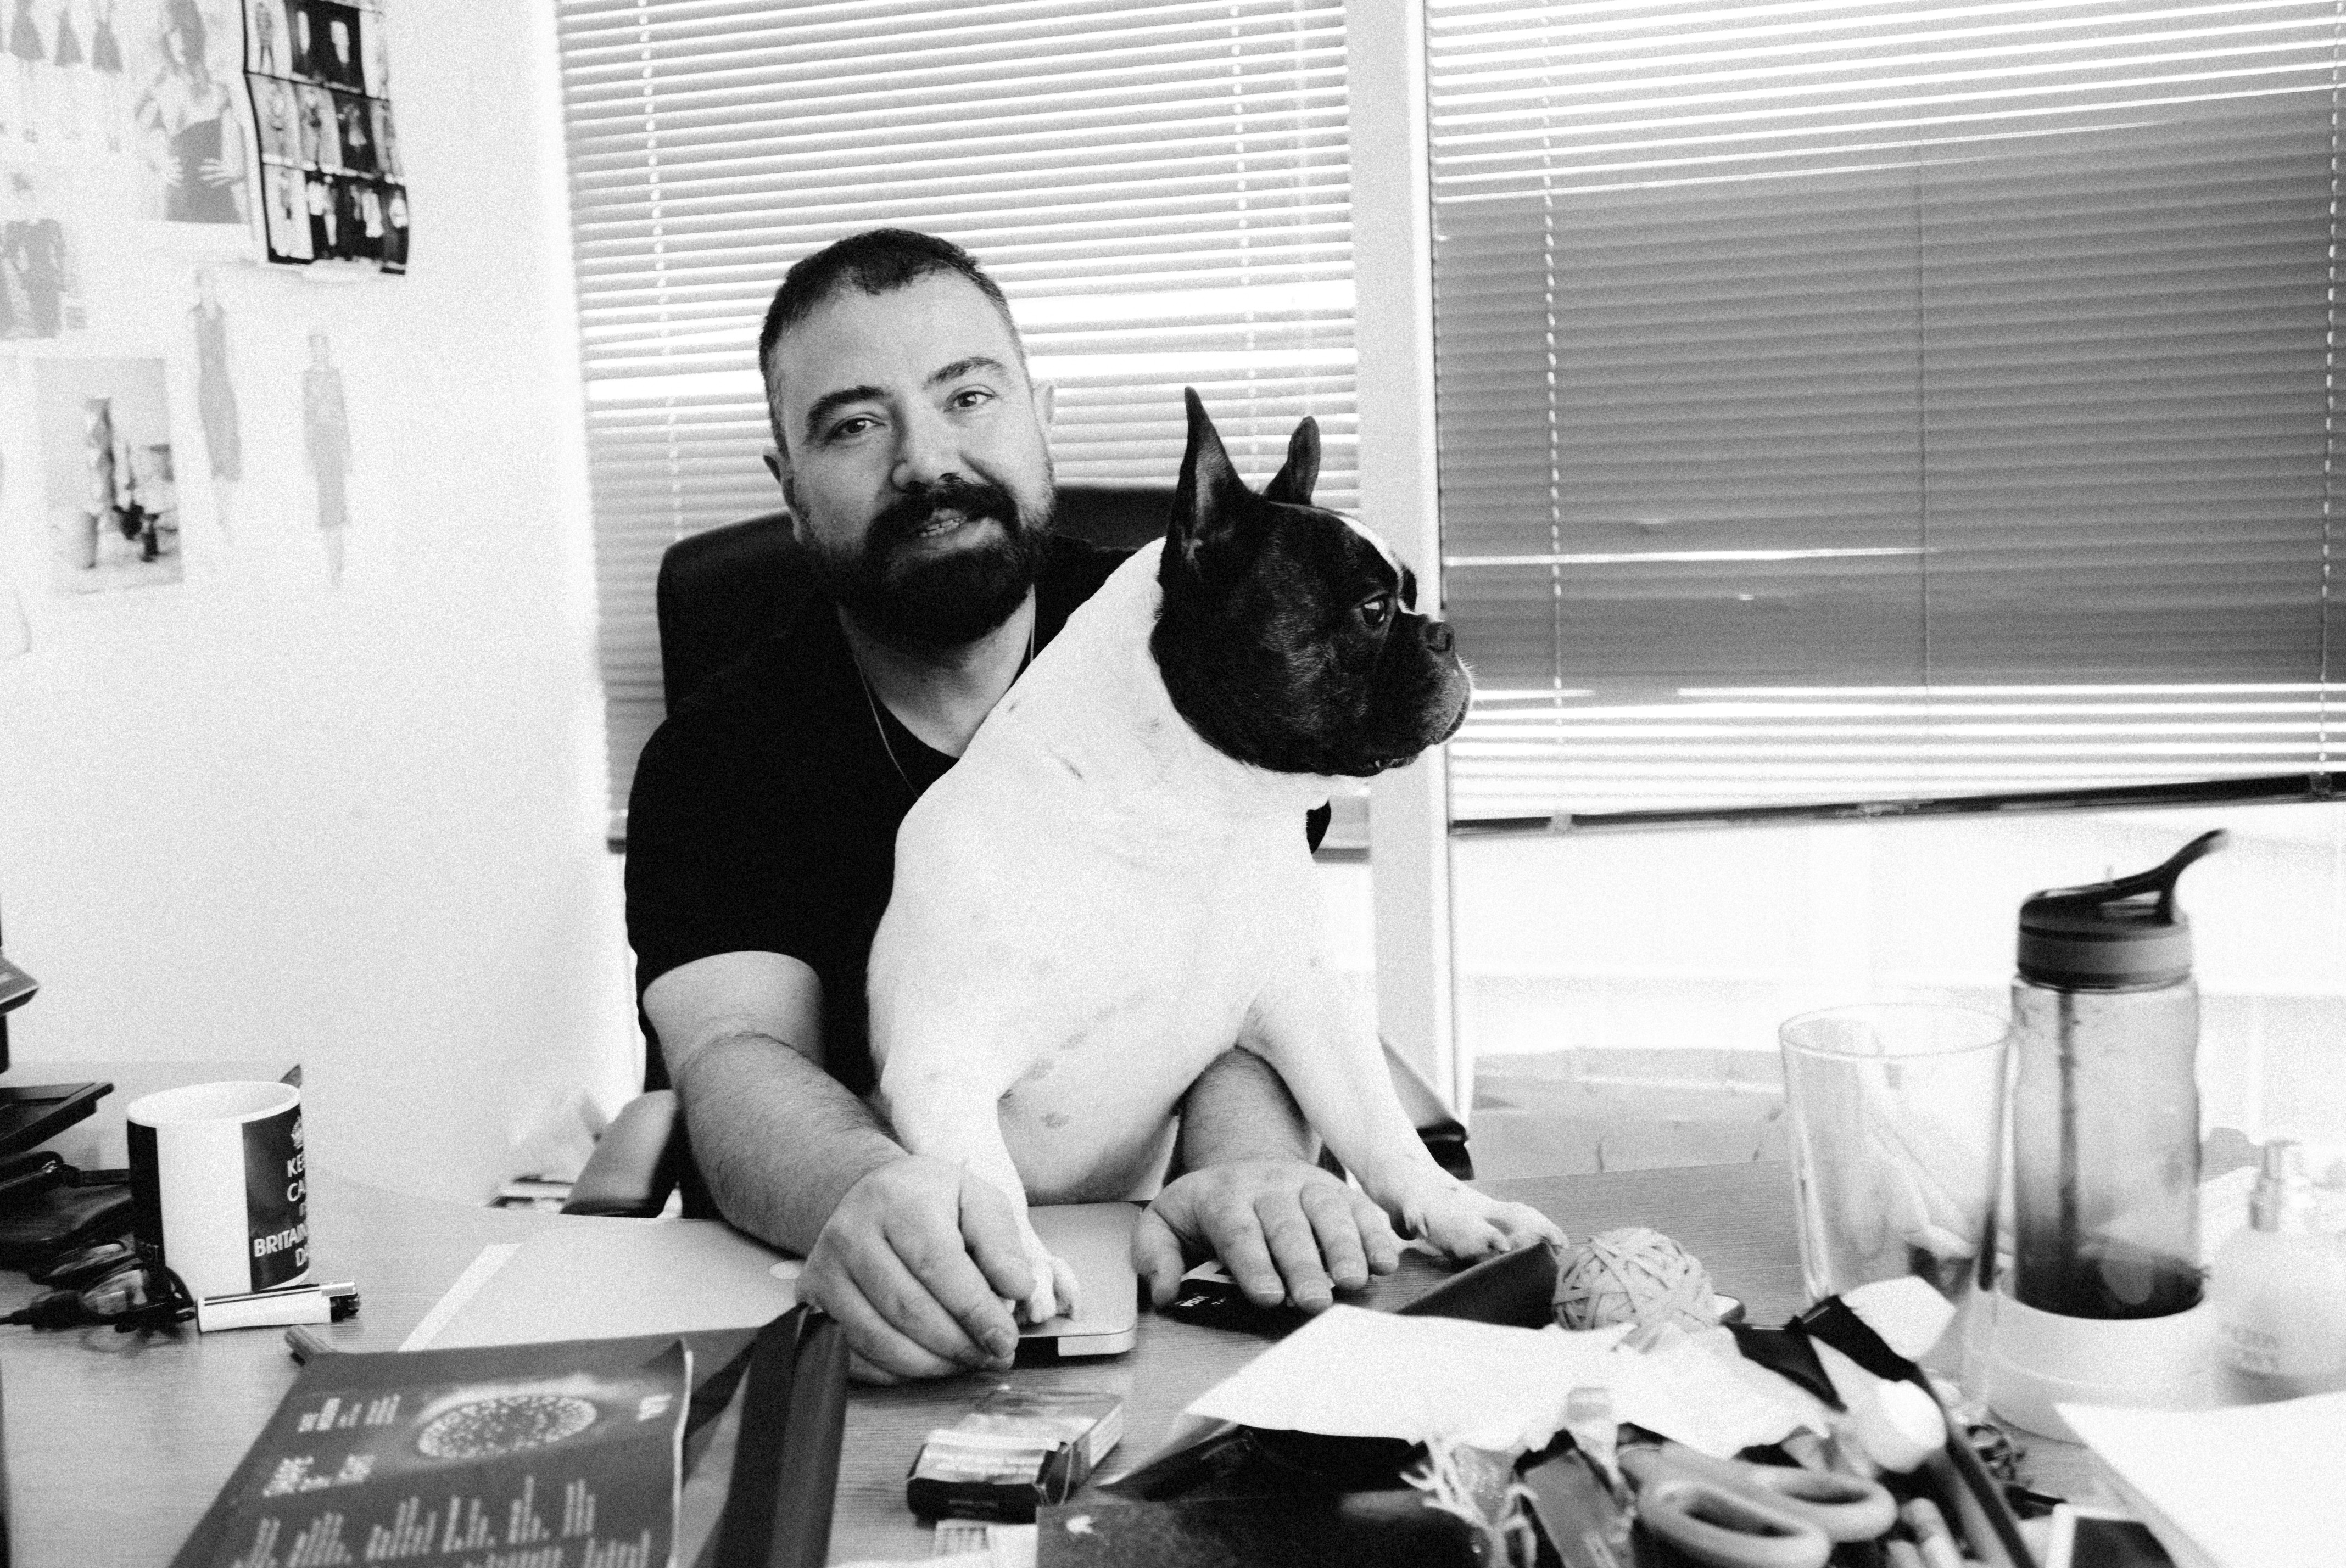 Max Lewisohn Emilio de la morena fashion designer interview luxury marionette dog